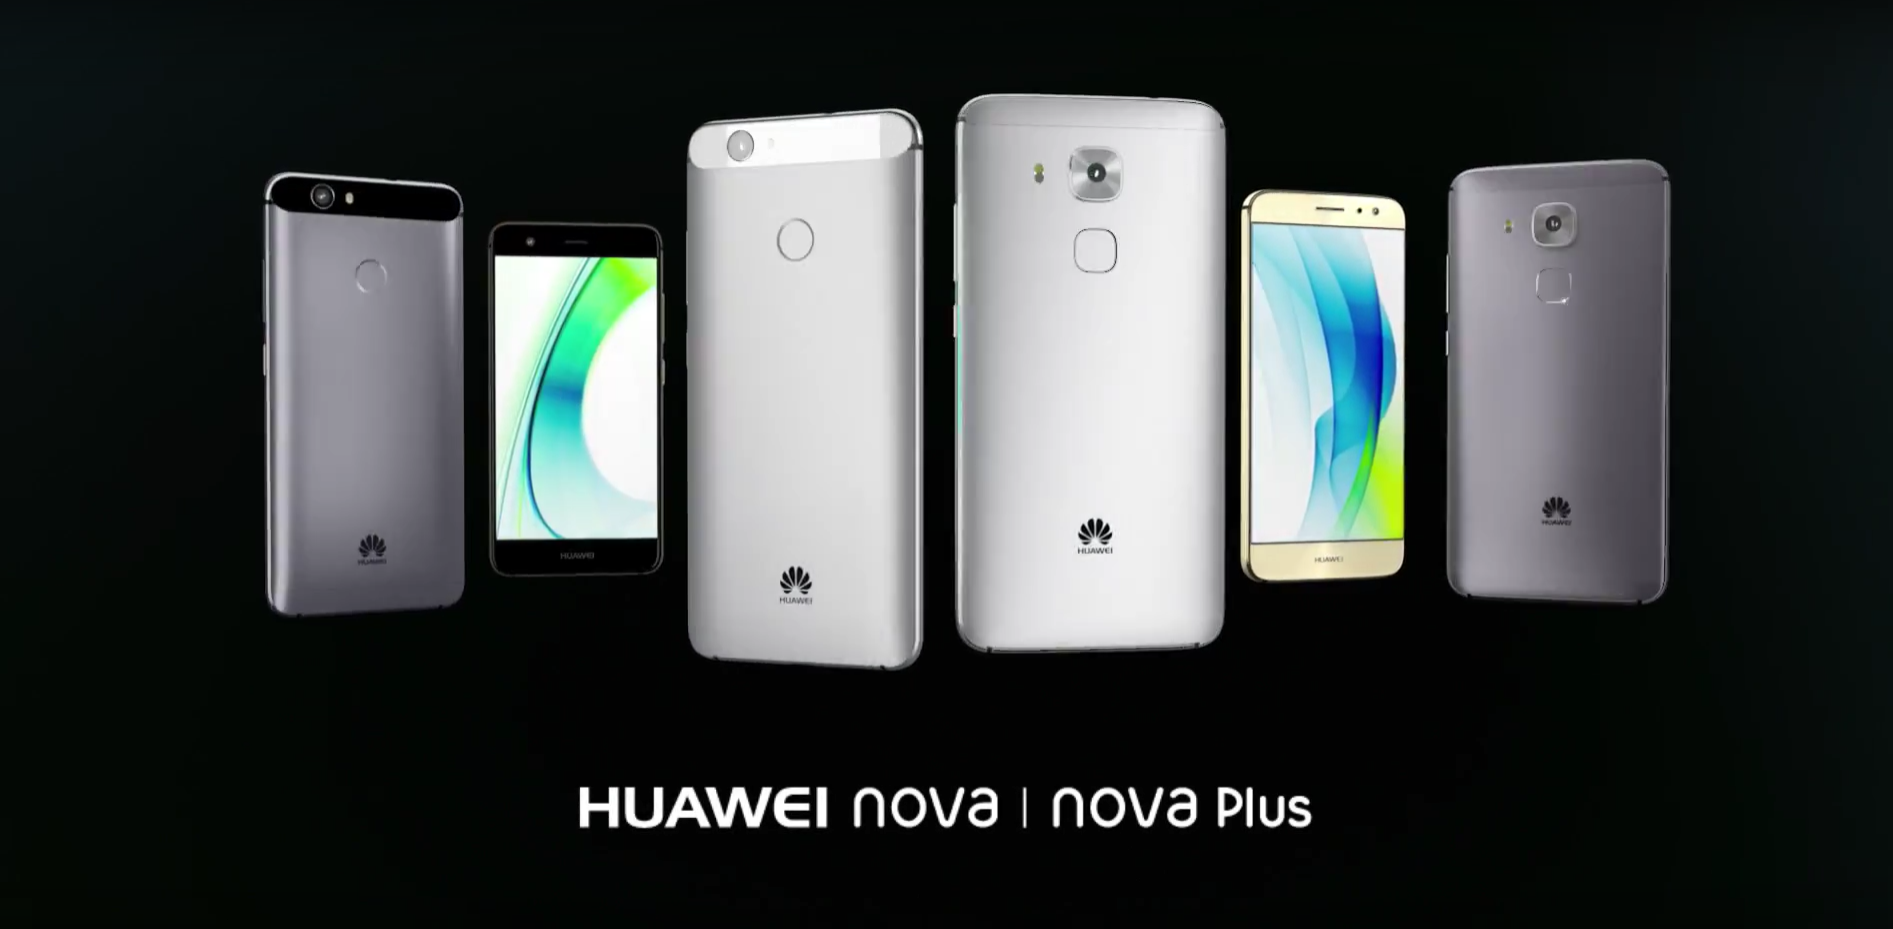 huawei nova plus | IFA 2016 | Huawei เปิดตัว Nova, Nova Plus และ MediaPad M3 ในงาน IFA 2016 ที่ผ่านมา